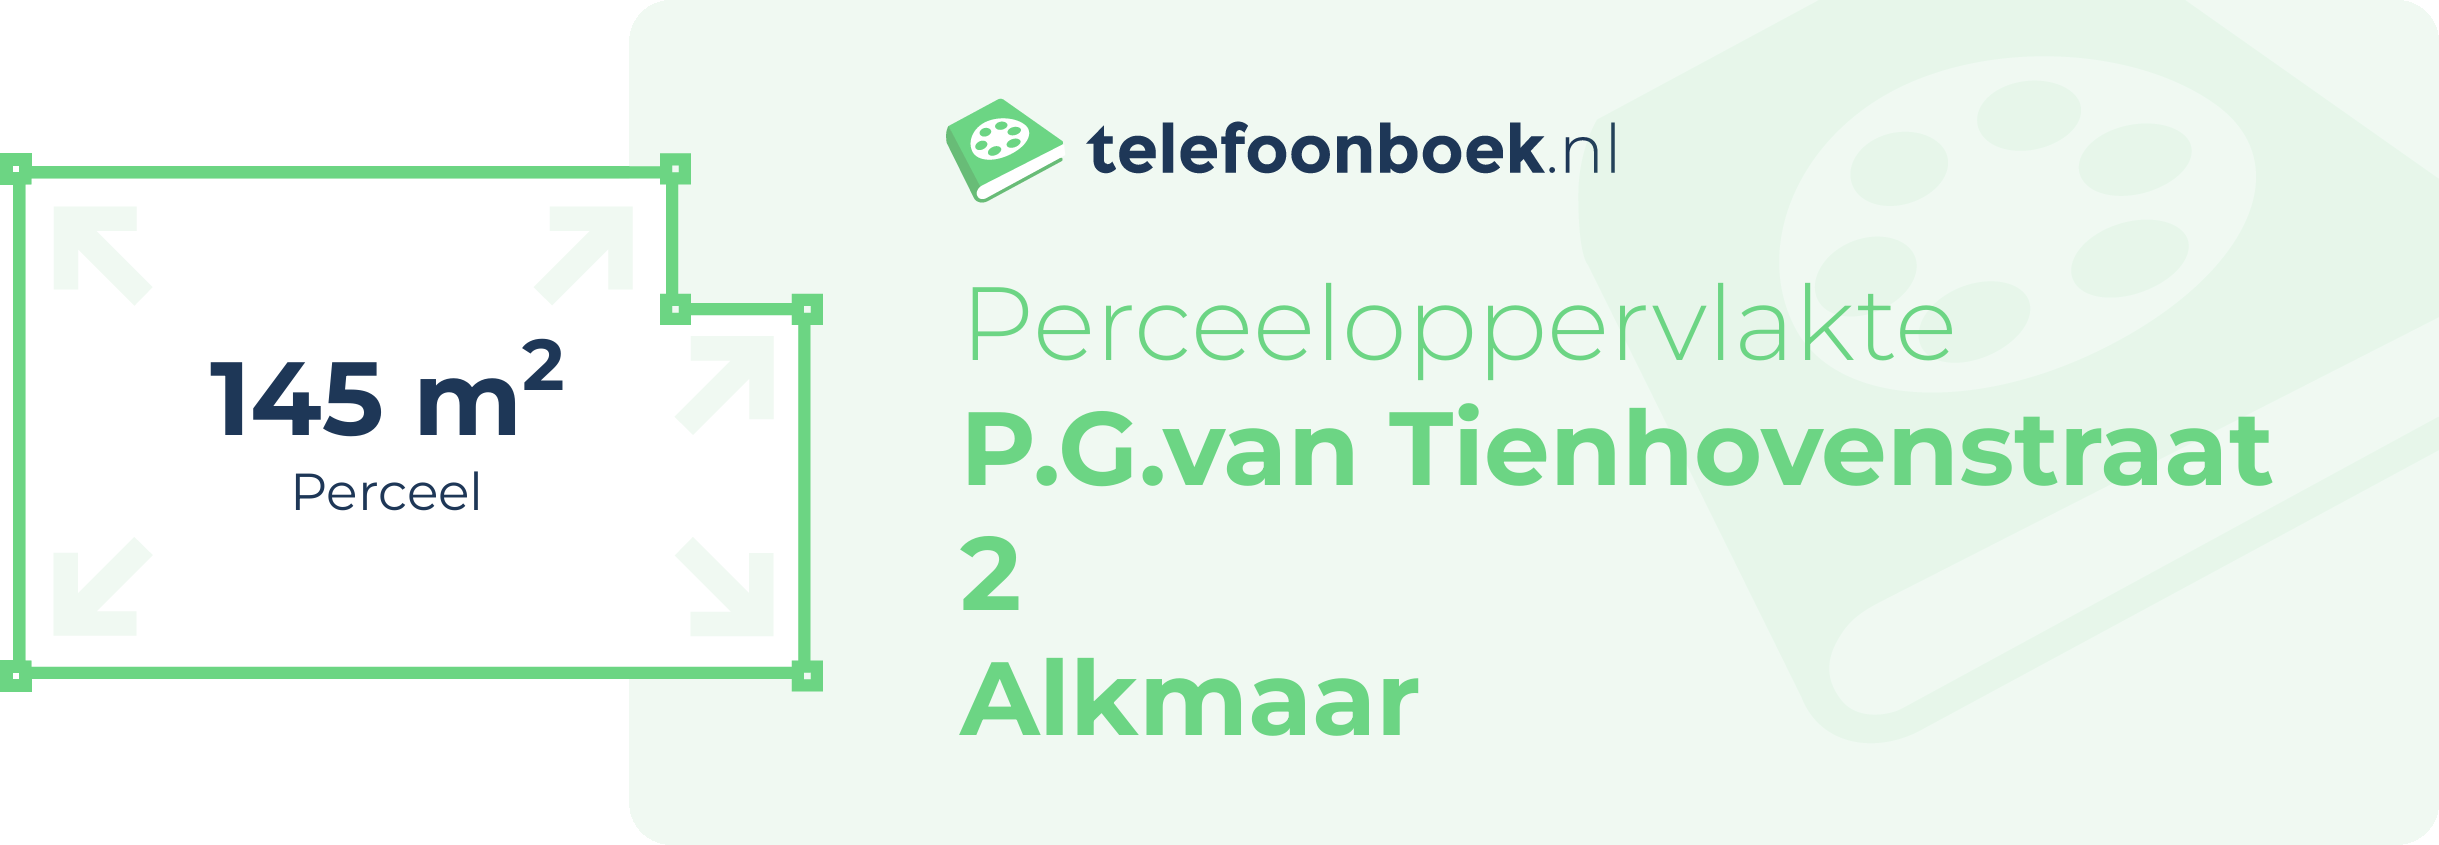 Perceeloppervlakte P.G.van Tienhovenstraat 2 Alkmaar